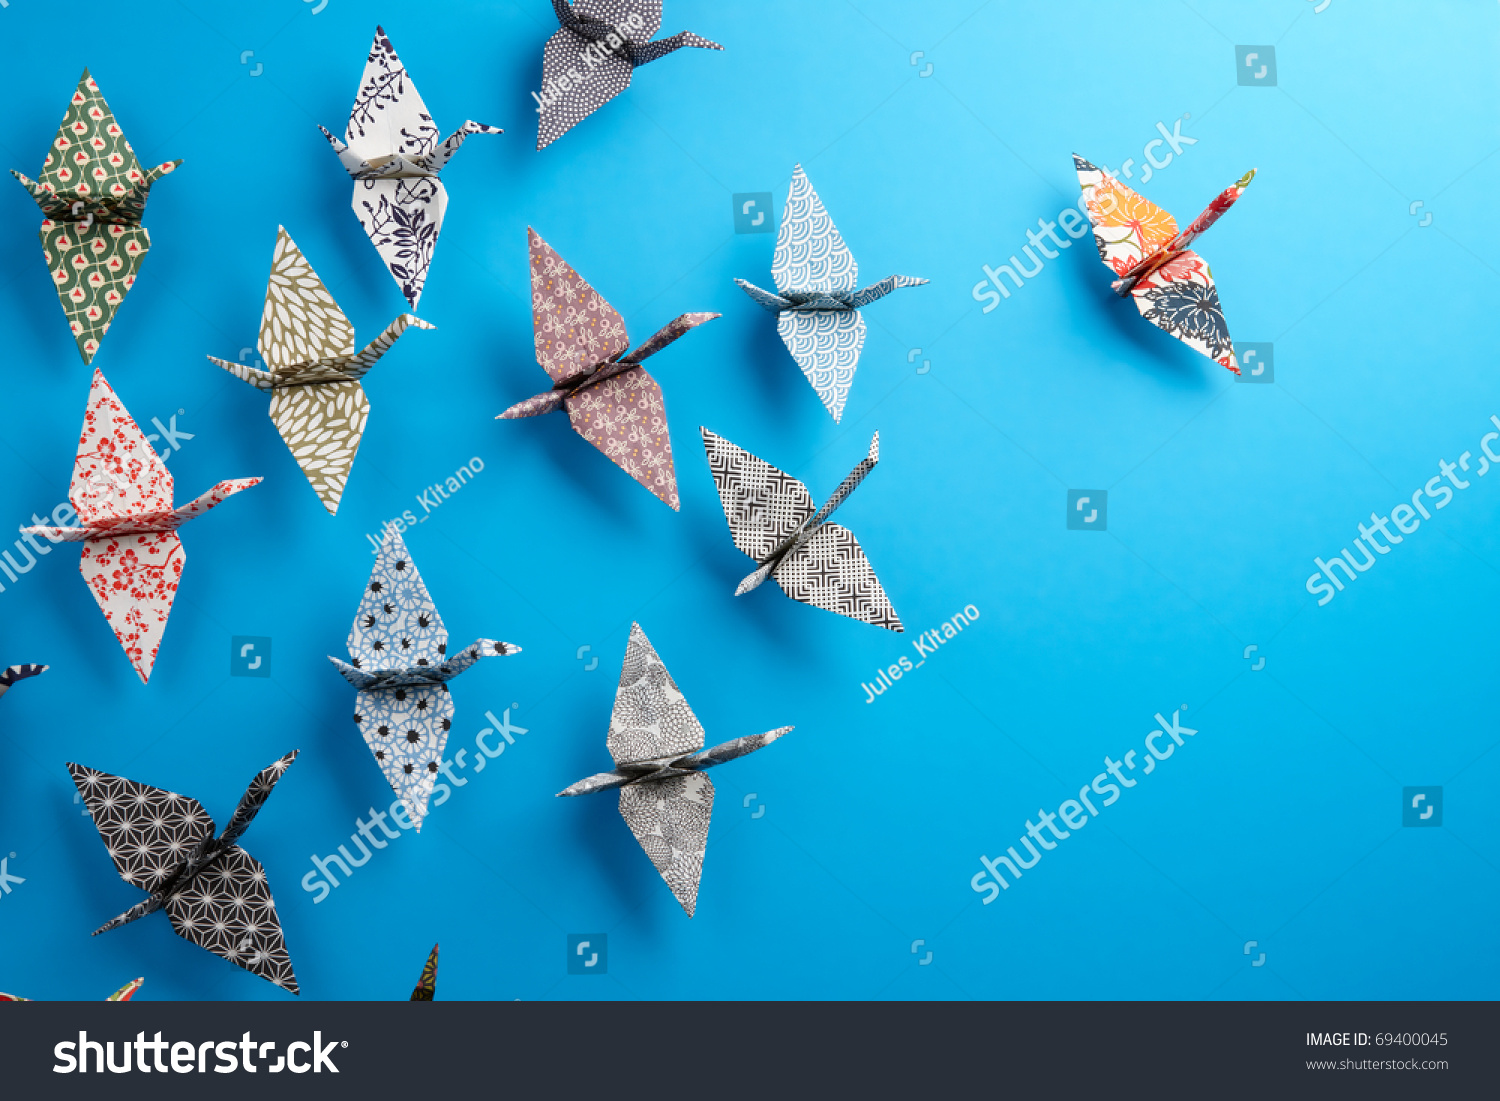 Colorful Origami Birds Flying Light Stock Photo 69400045 Shutterstock